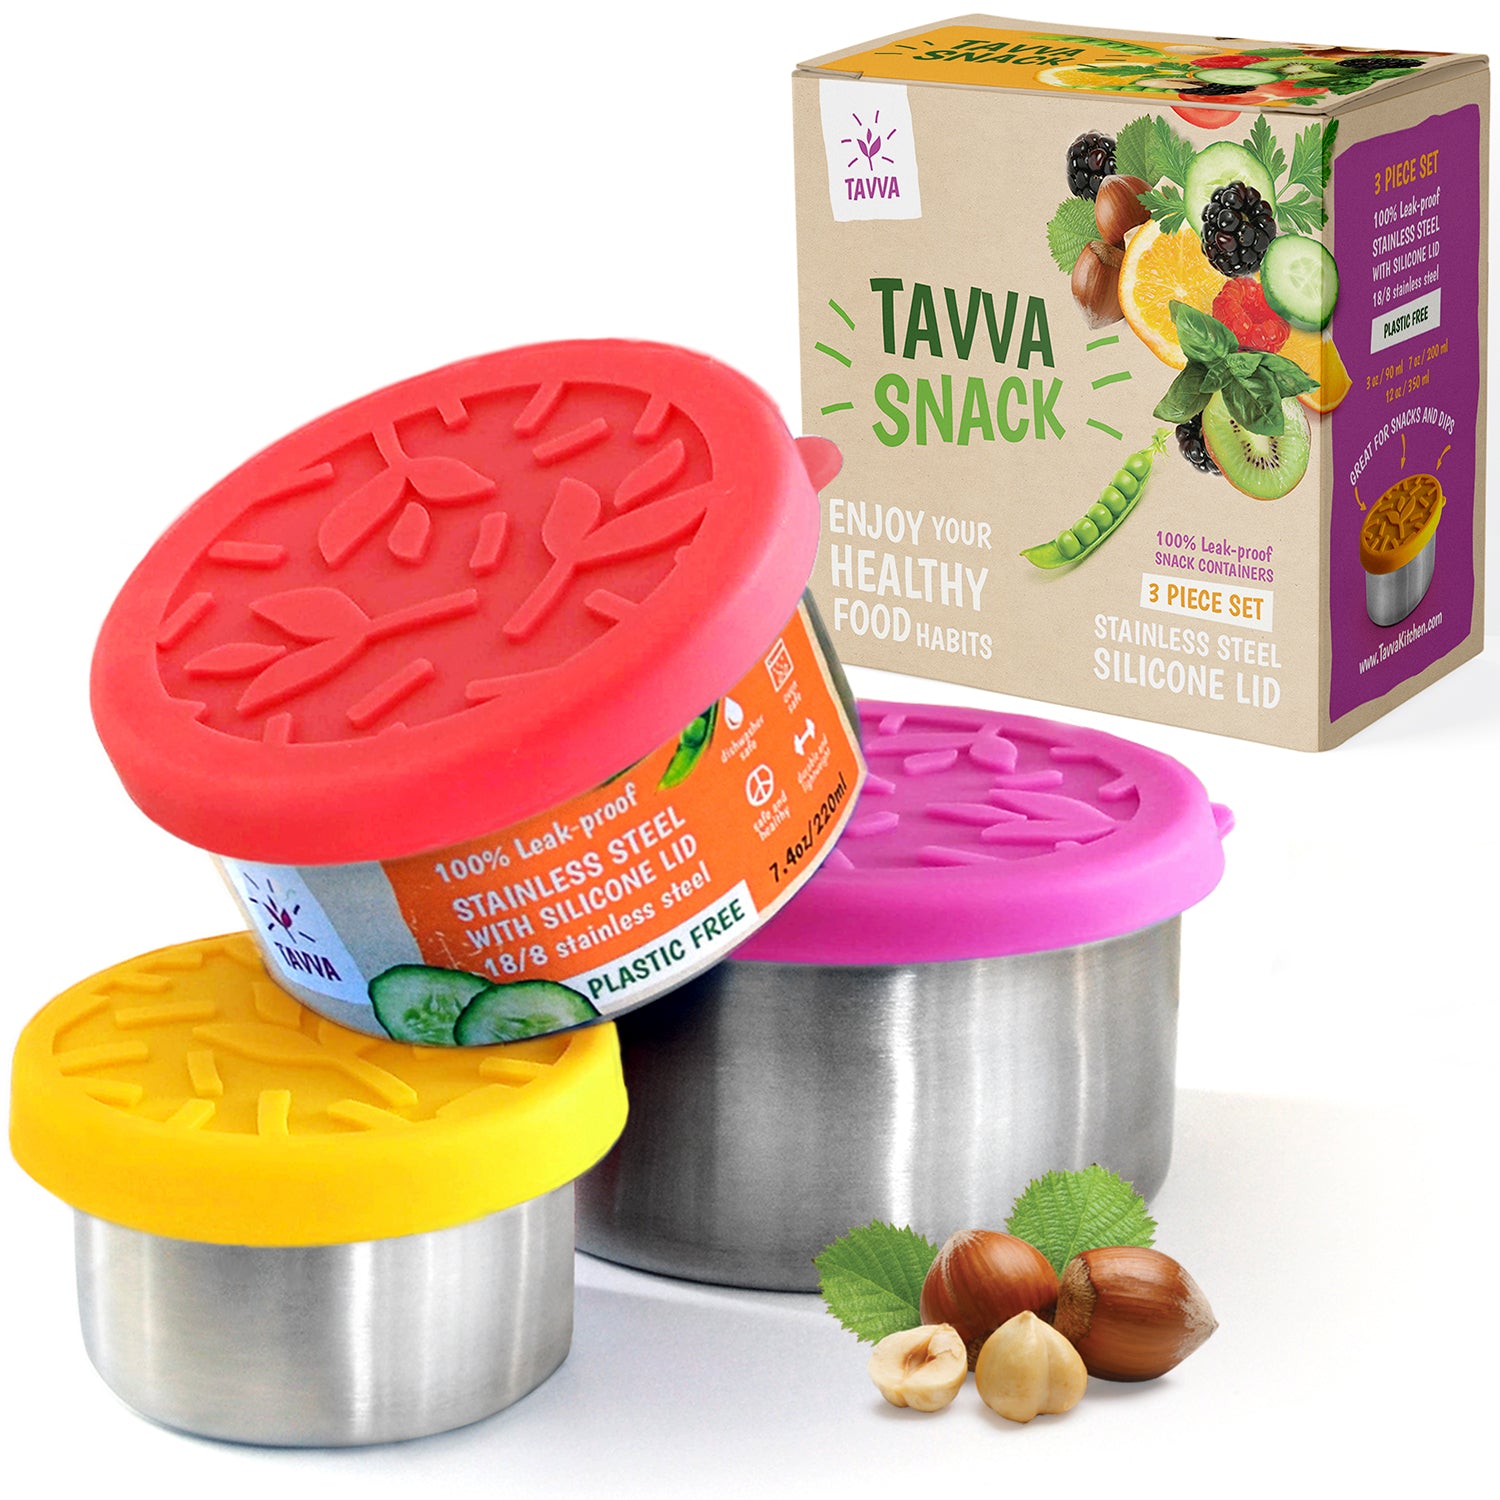 TAVVA tavva stainless steel food containers - plastic free